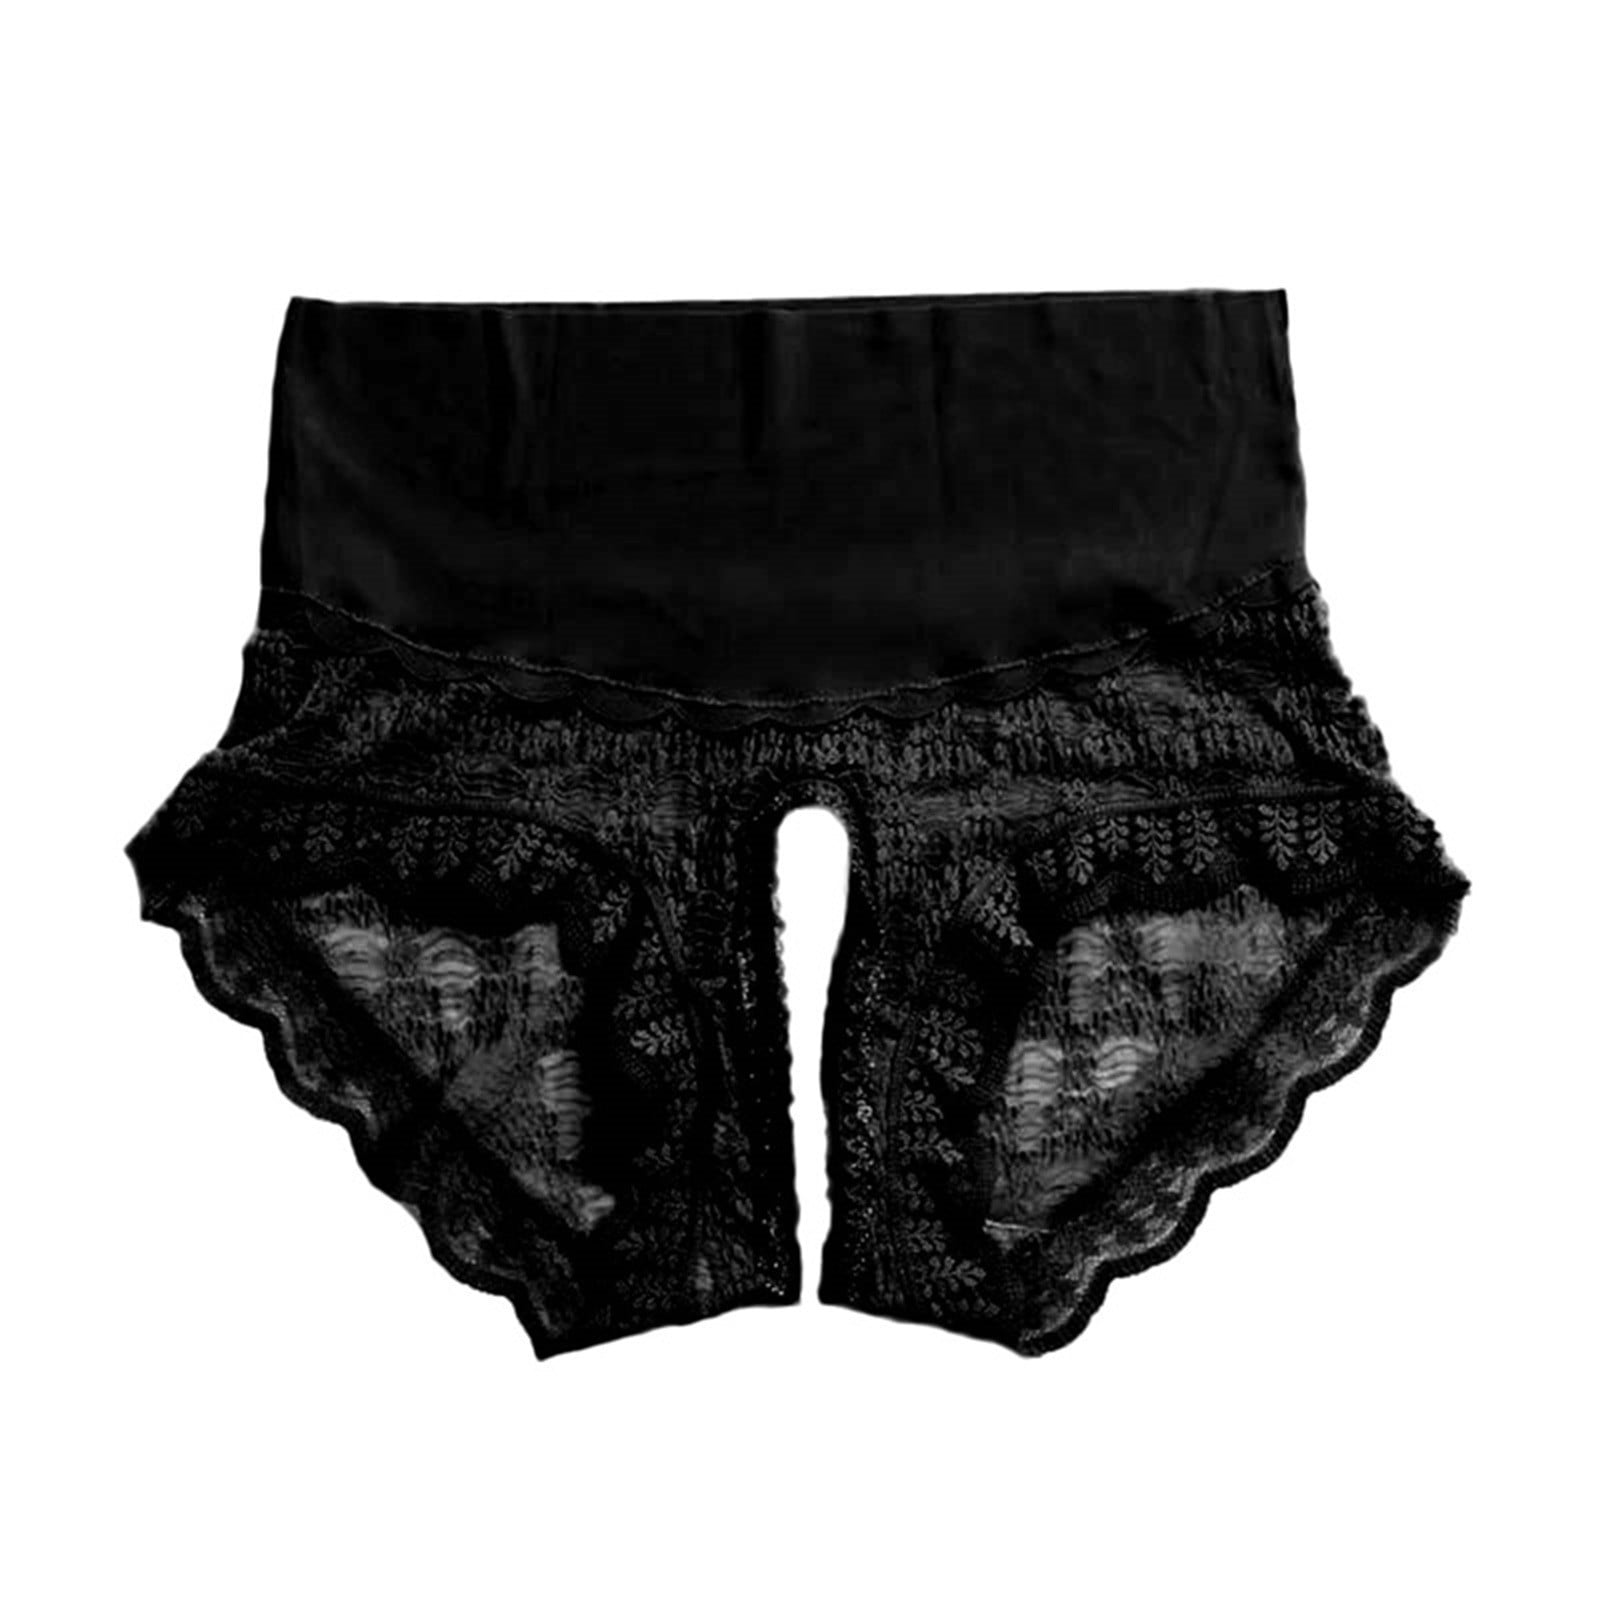 zuwimk Panties For Women,Women's Underwear No Panty Line Promise Tactel  Bikini Gray,M